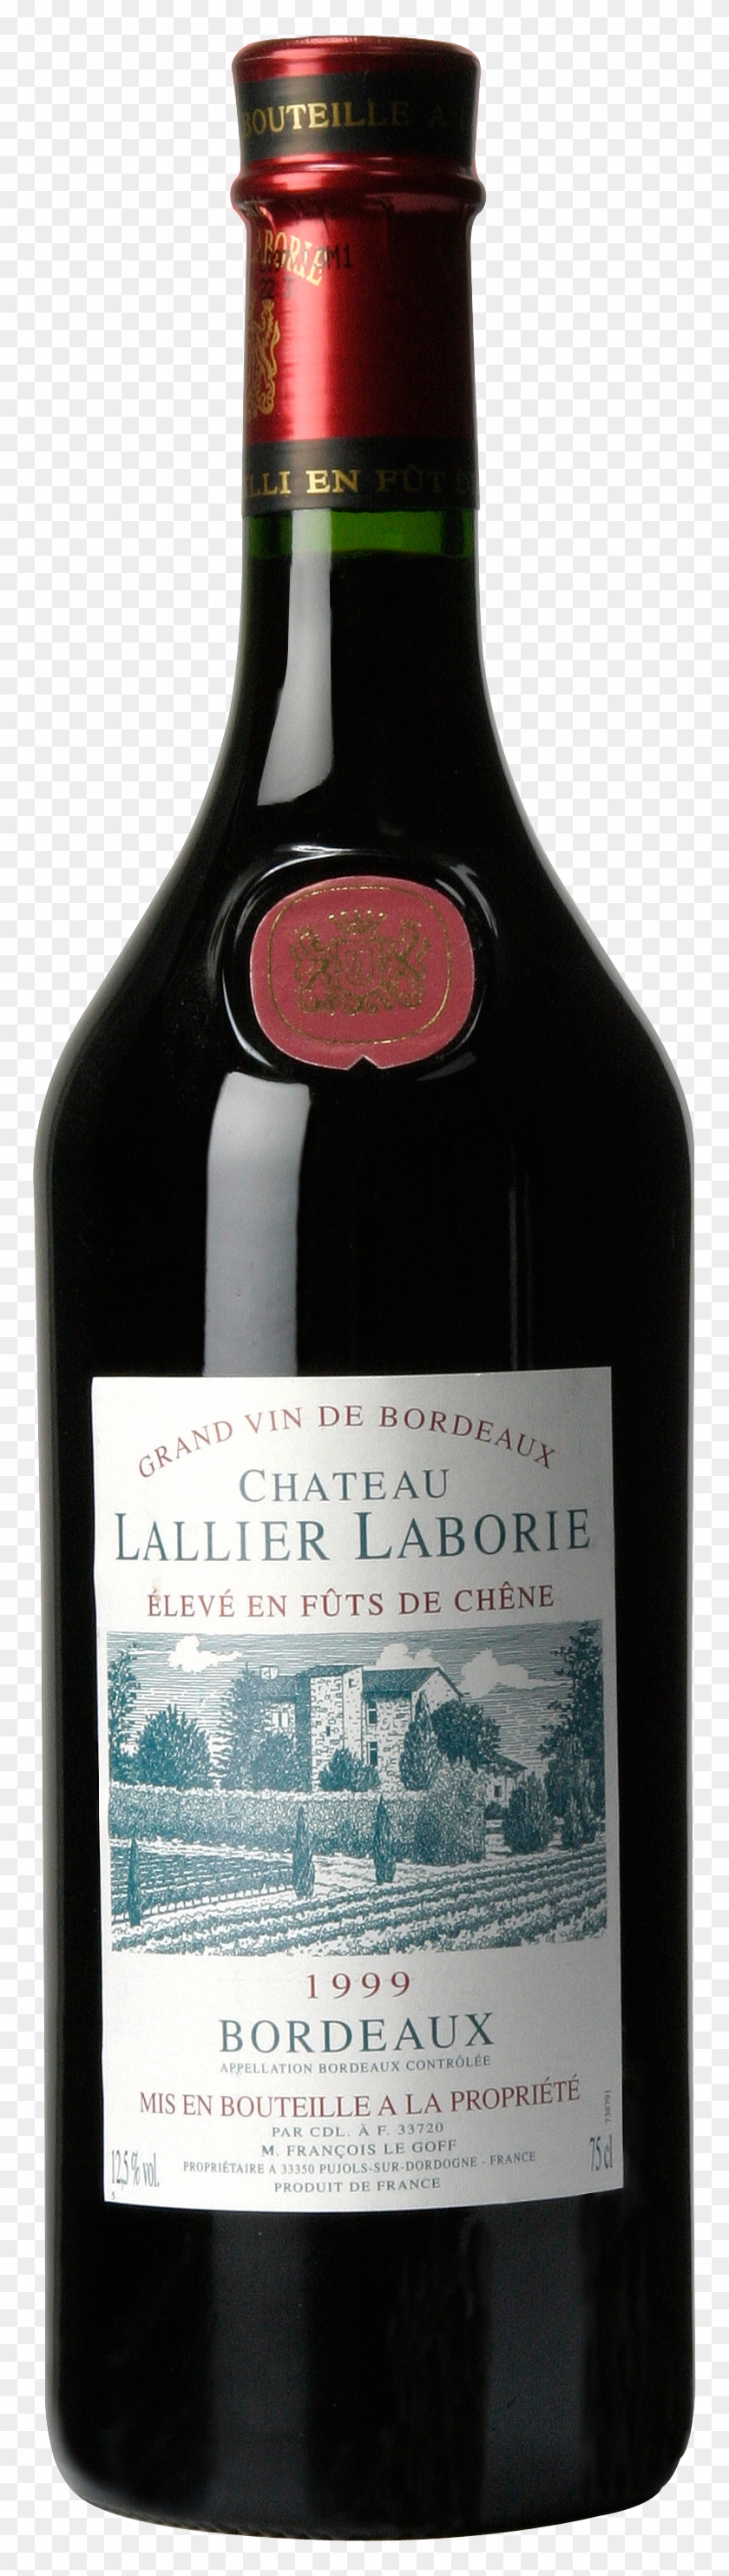 Wine Bottle Png Image - Bottle Clipart